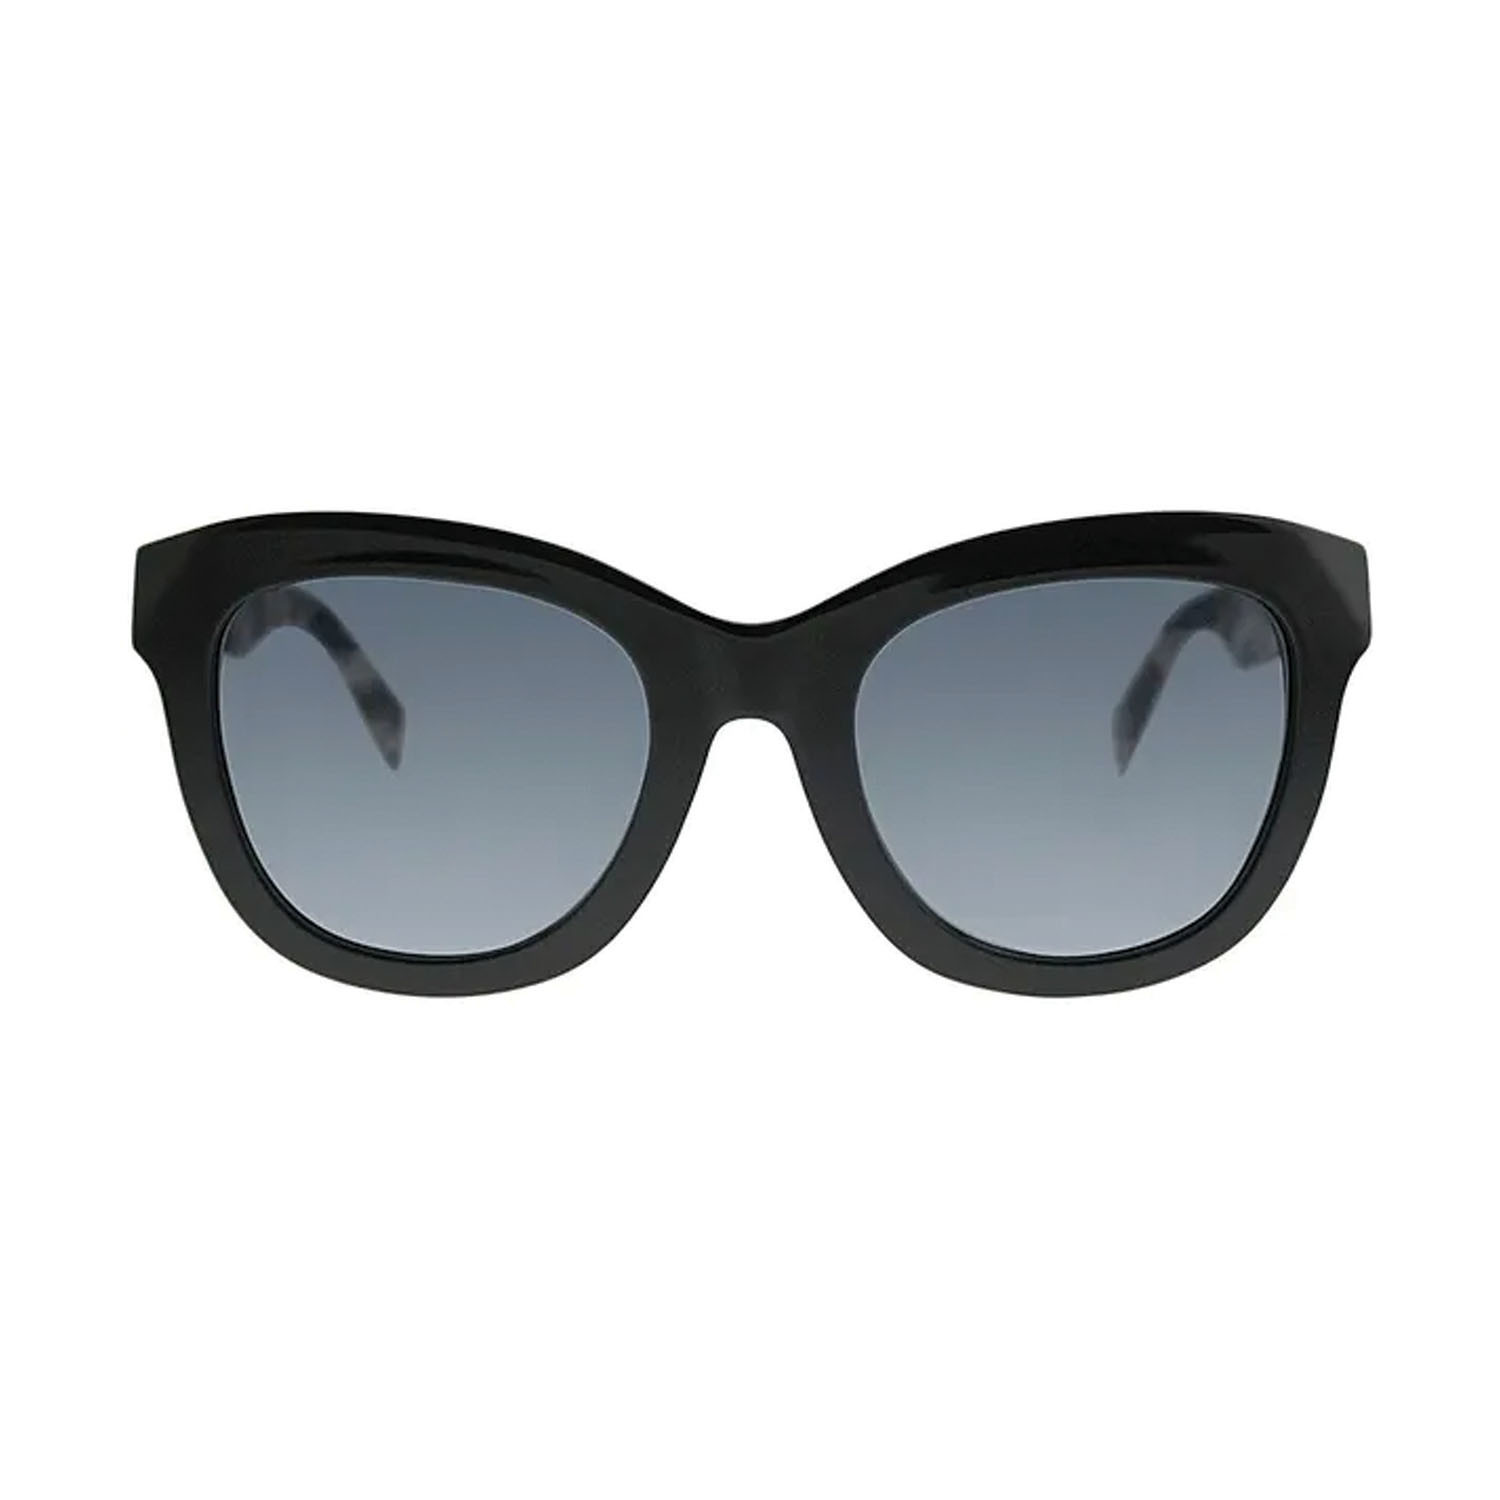 Fendi // Women's Sunglasses // Black Abstract + Gray - Celine, Fendi ...